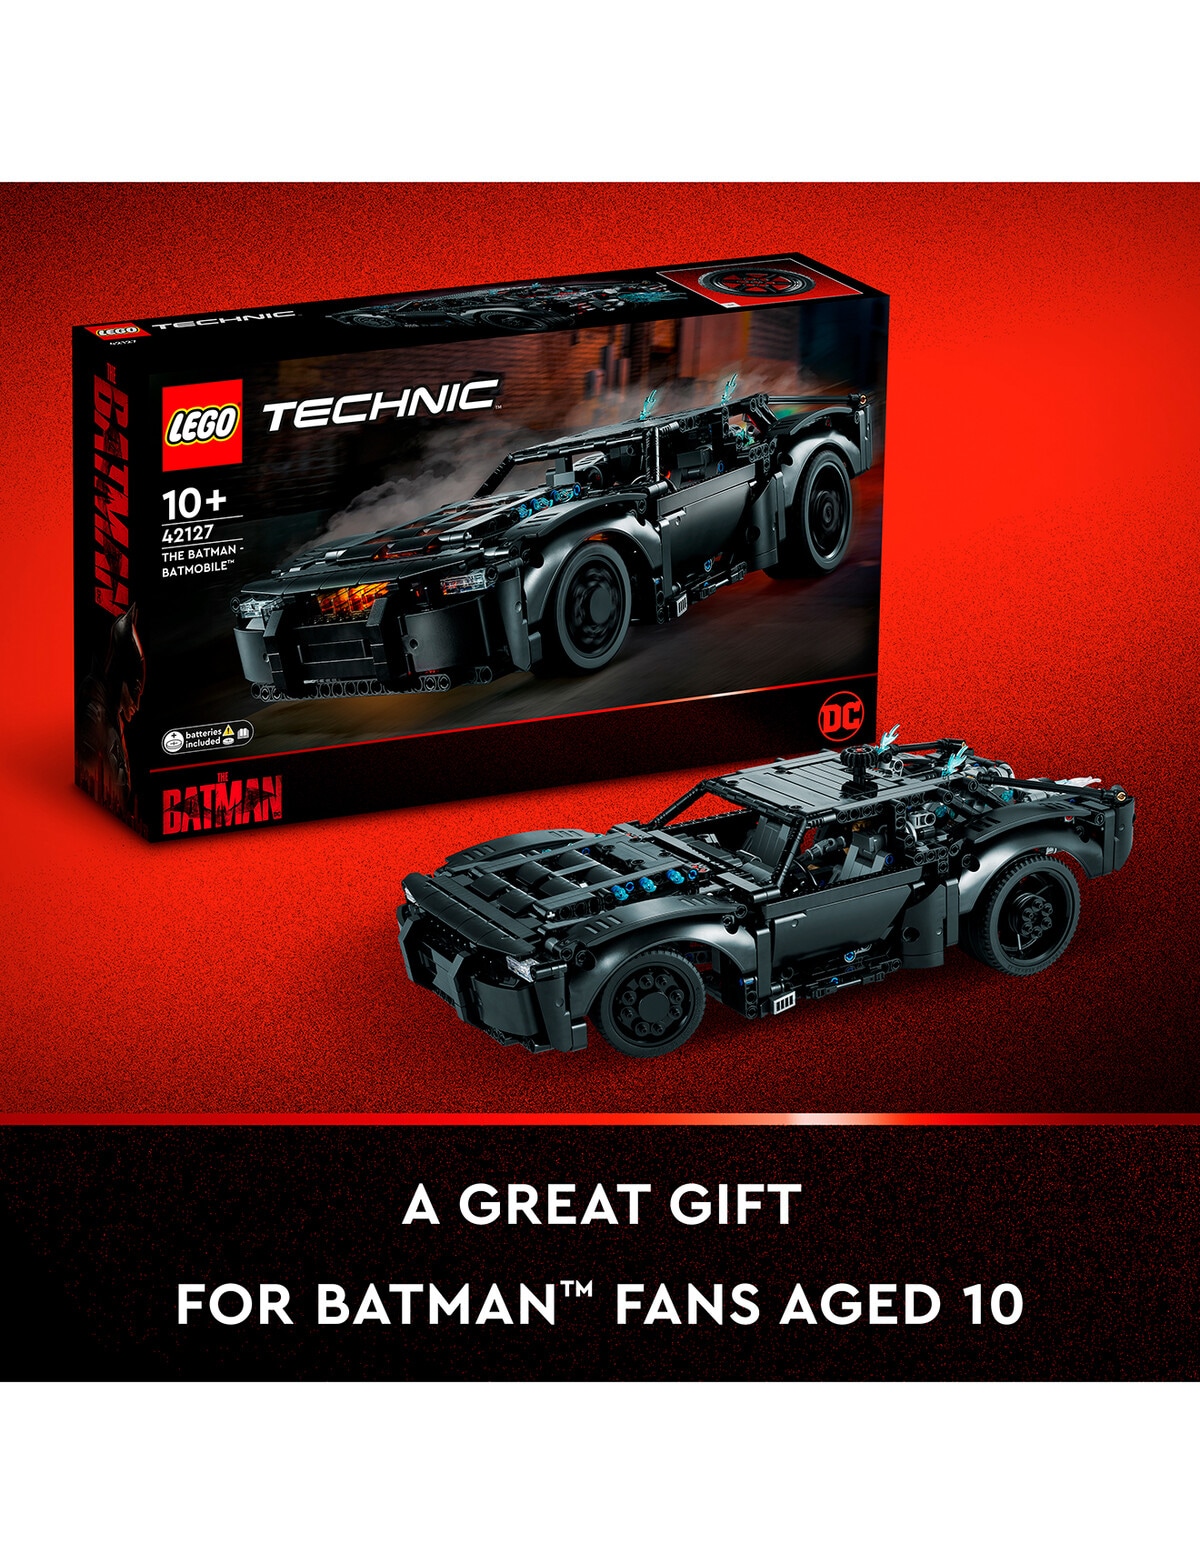 LEGO Technic THE BATMAN – BATMOBILE 42127 Model Car Building Toy